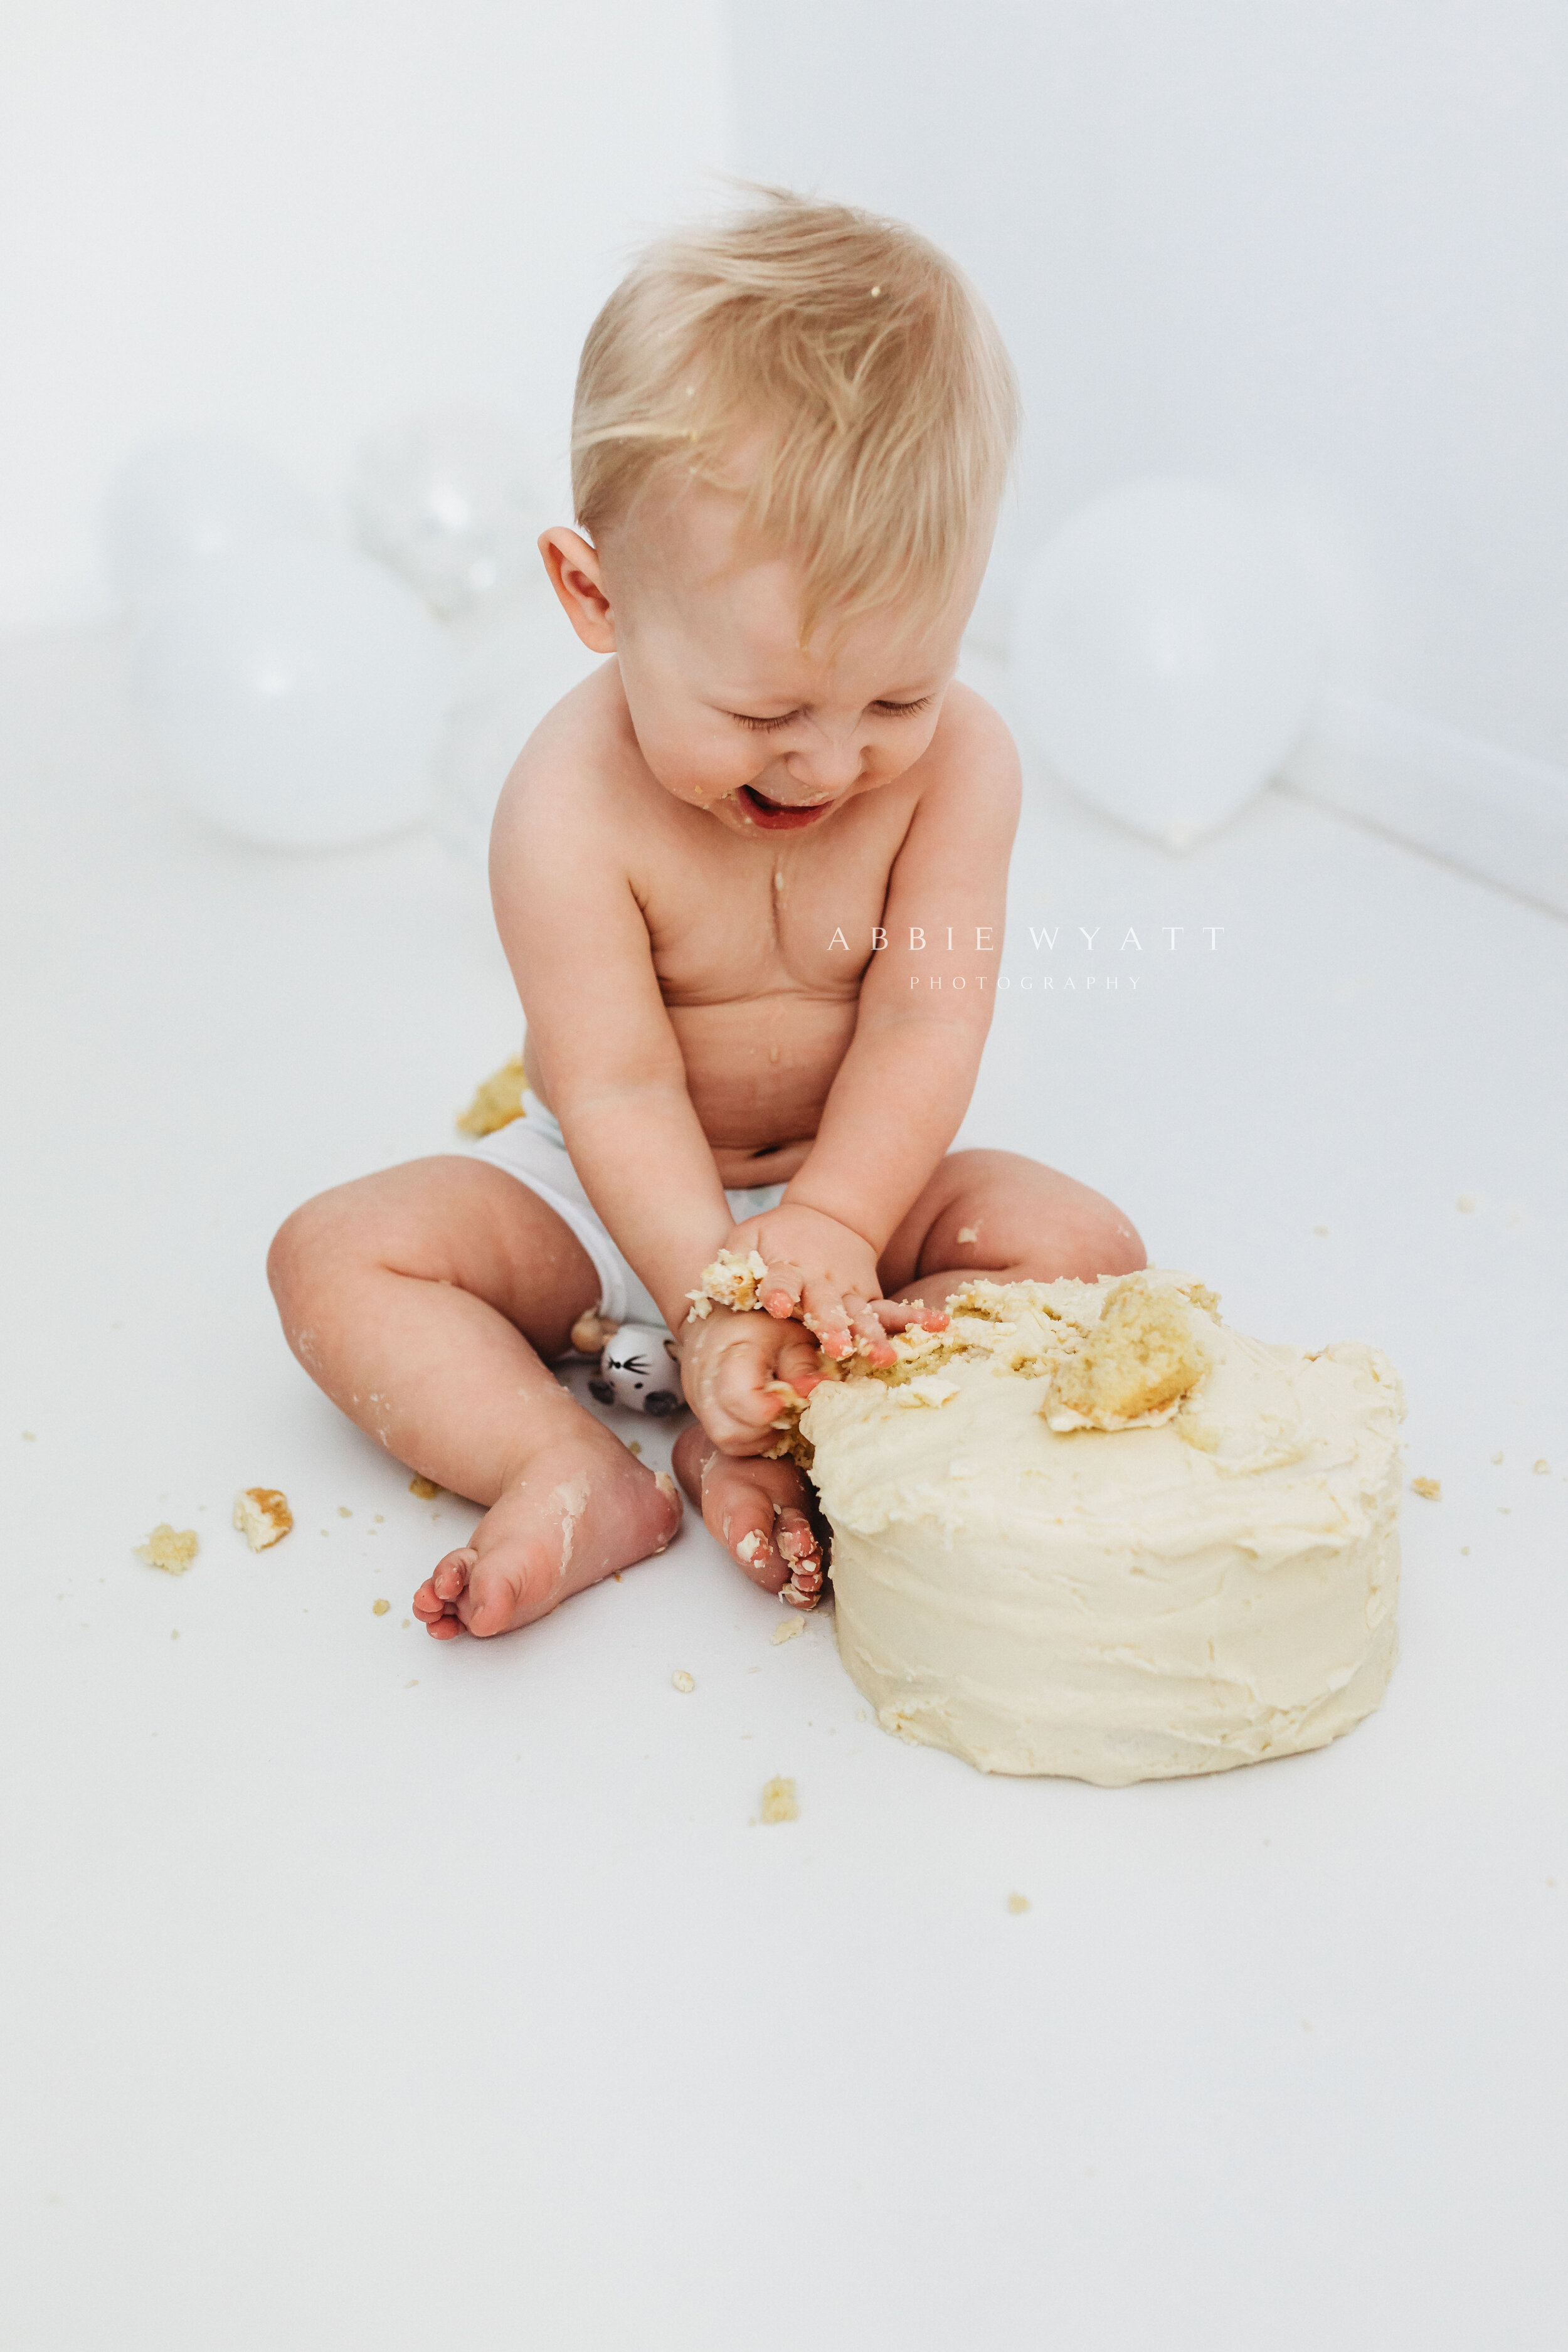 Abbie Wyatt Photography - Newborn, Baby &amp; Cake Smash Photographer. Based in Hemel Hempstead.